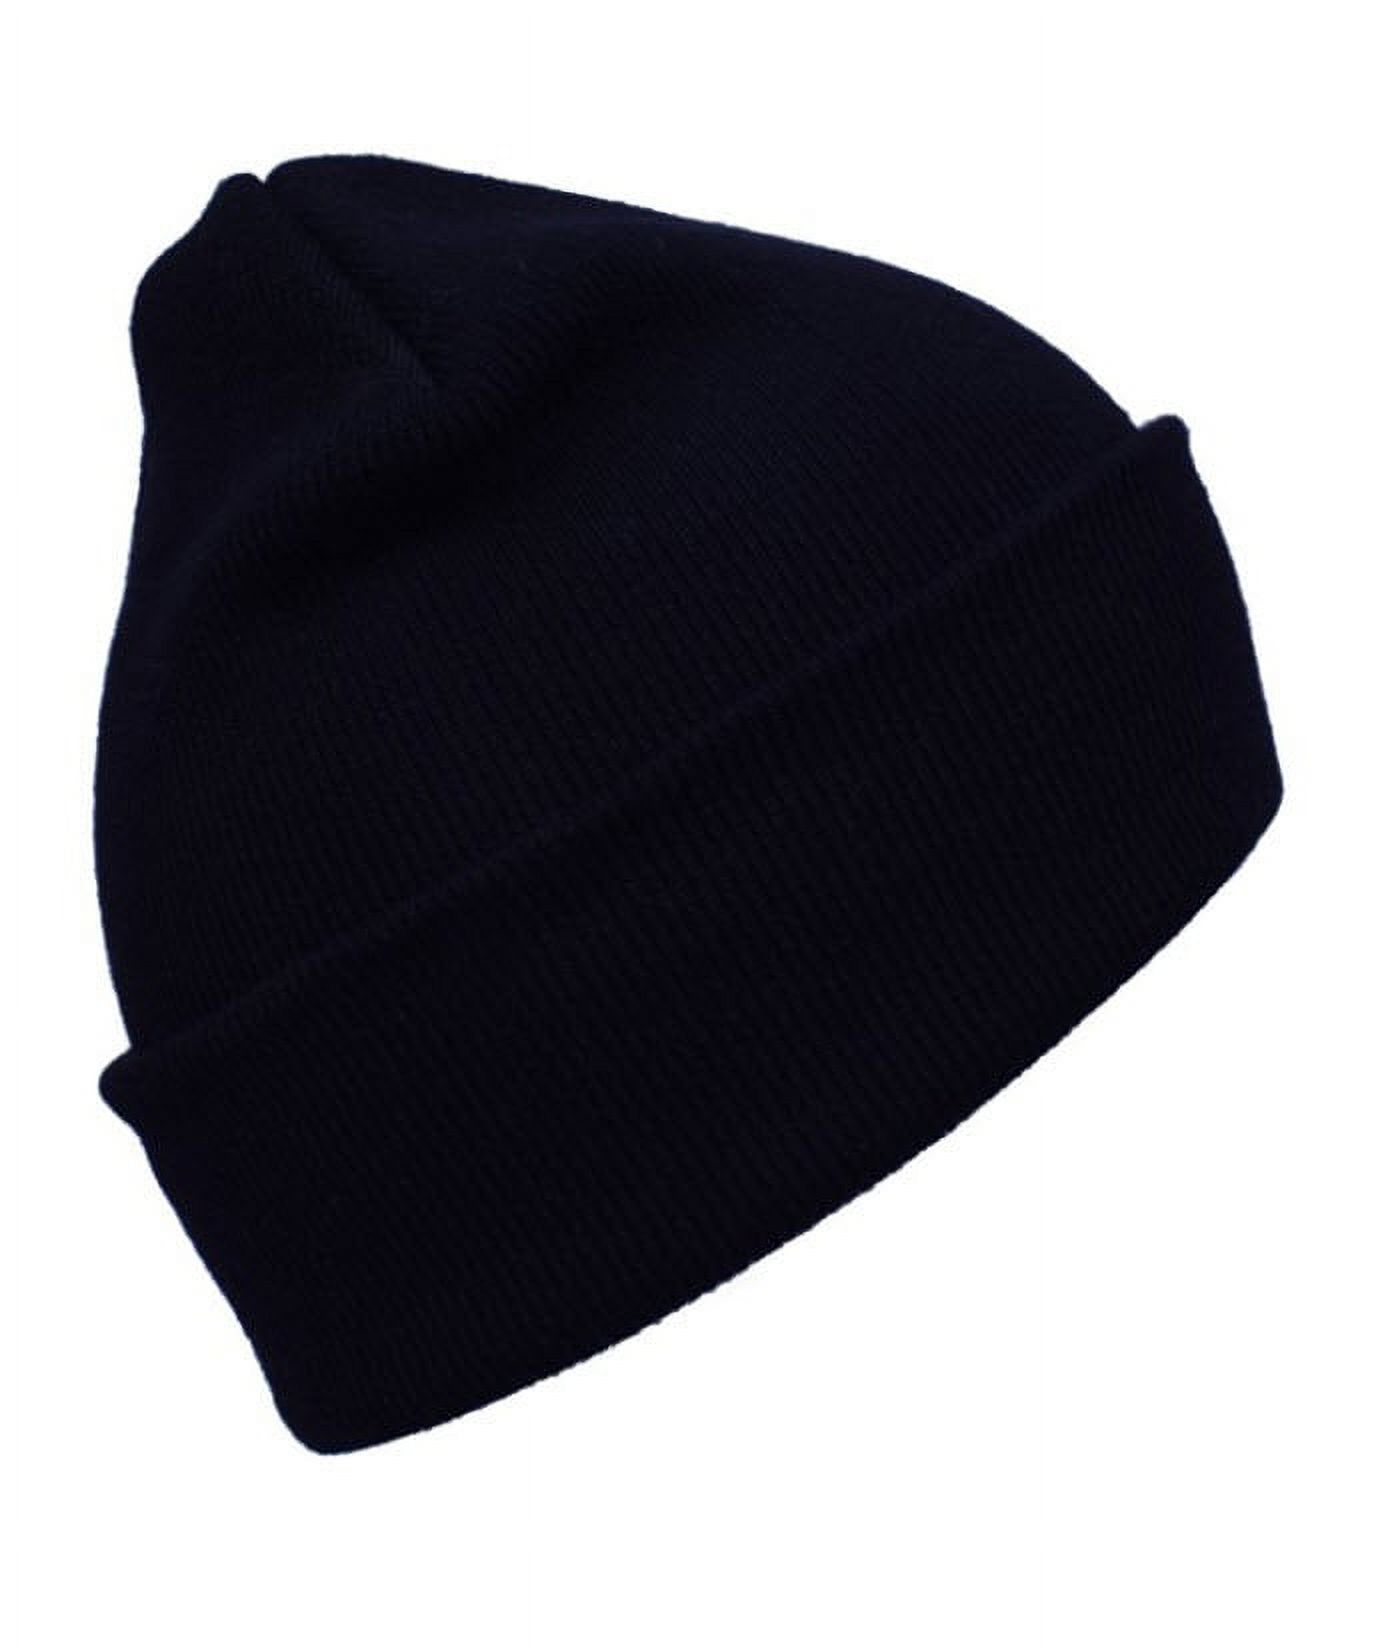 SET OF 4 BEANIE Warm Winter Beanies Hats Cap Toboggans Thermal Knit Cuff Acrylic Ski hats 12" (Navy+Black+Gray+Camo) - image 3 of 5